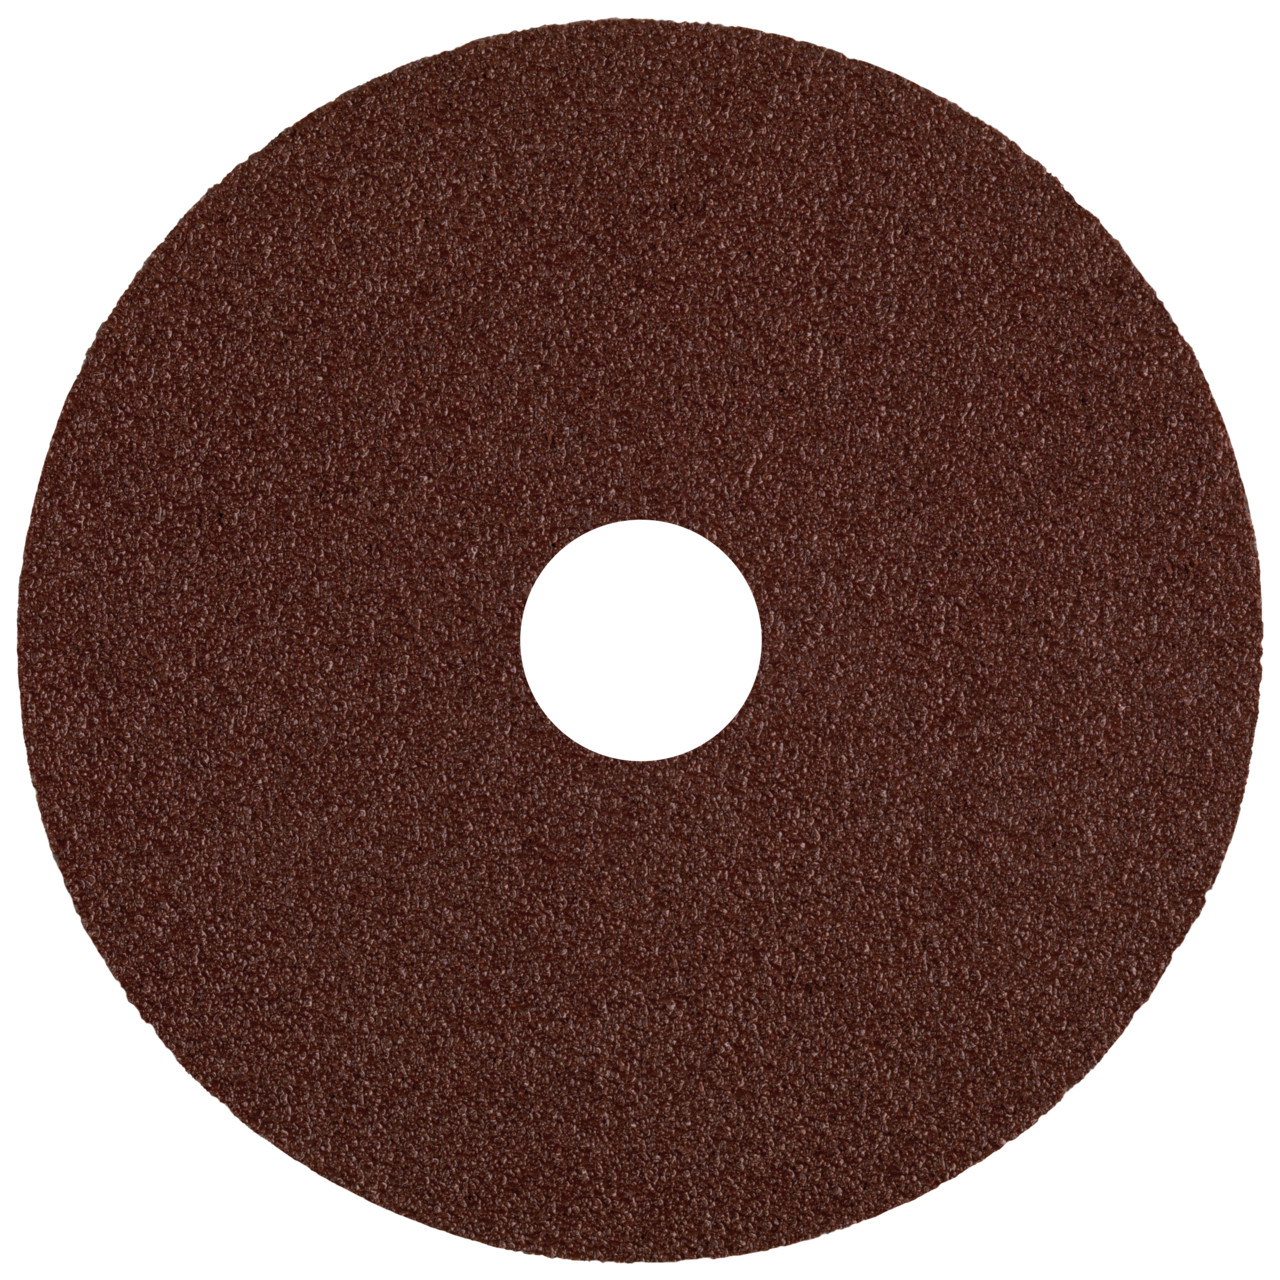 TYROLIT A-B02 V Vulcanized fibre disc DxH 125x22 For steel, non-ferrous metals and wood, P36, shape: DISC, Art. 34286500